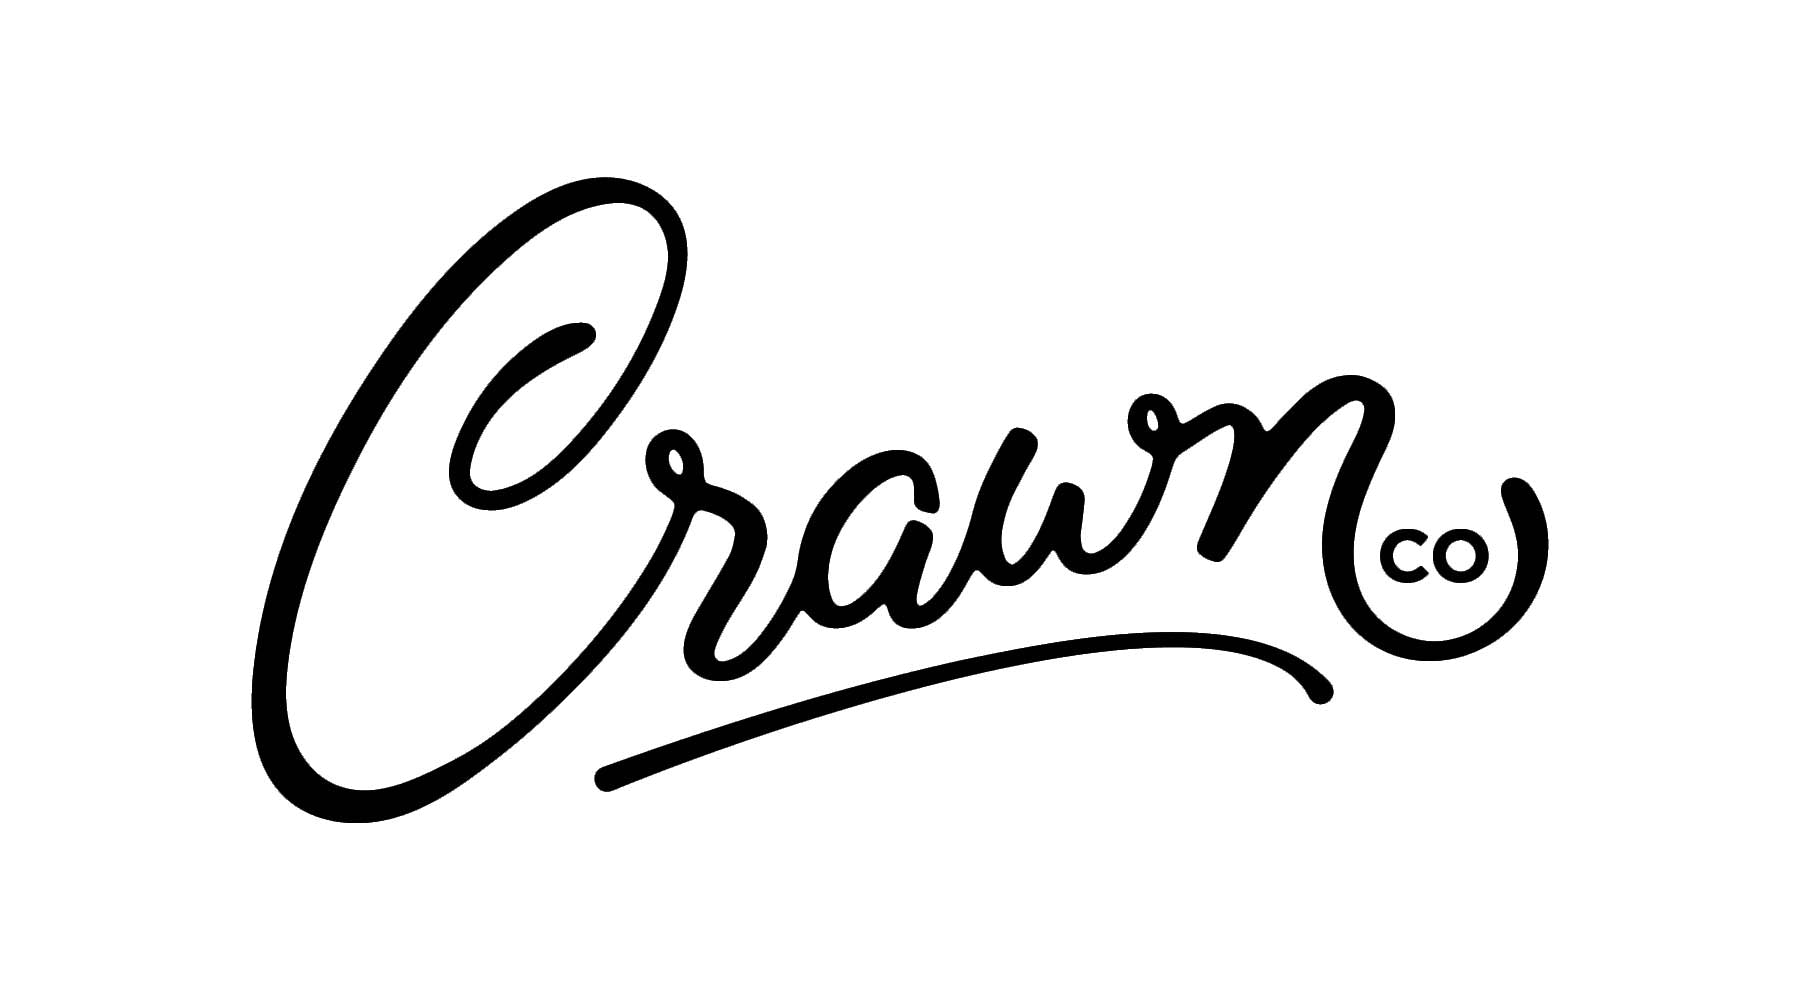 crawn co cannabis logotype design